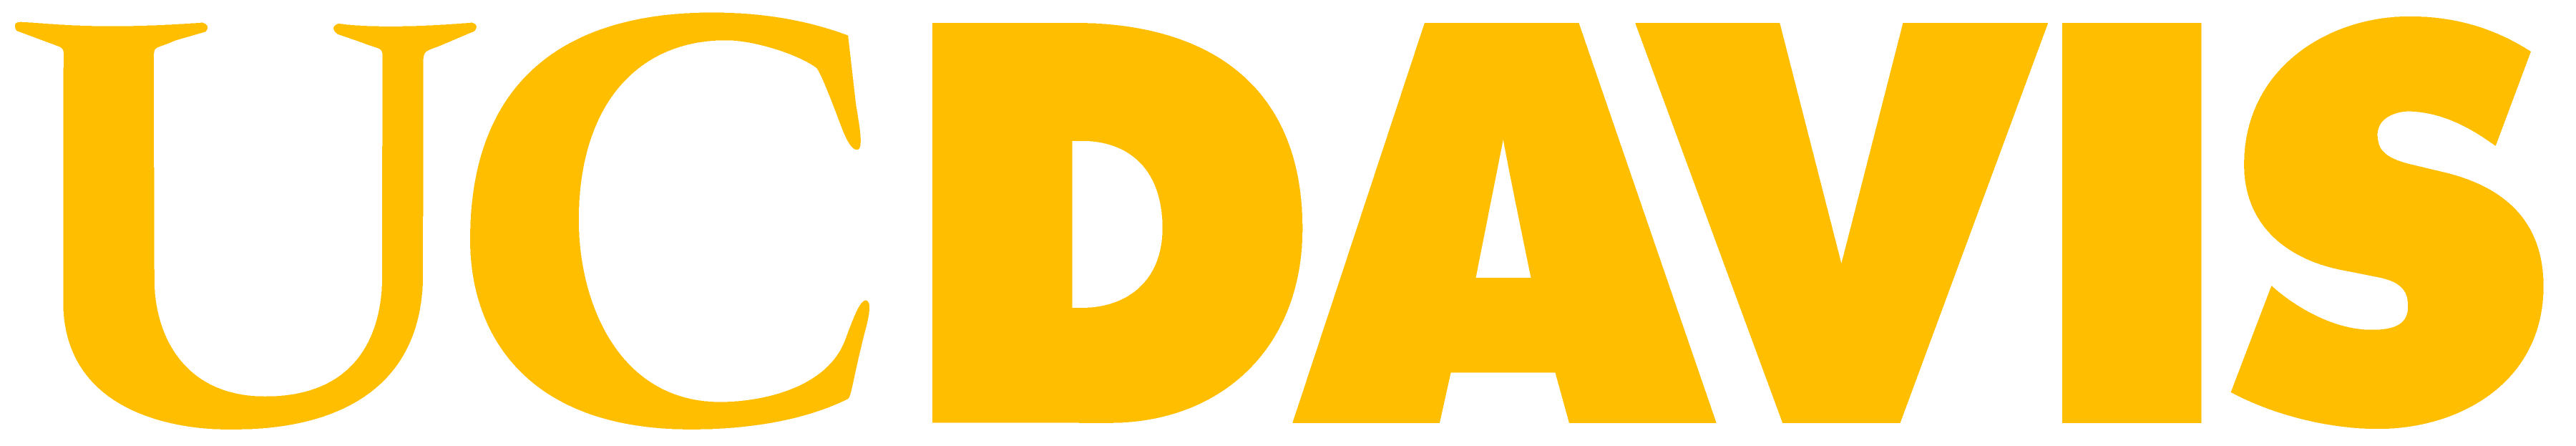 ucdavis_logo